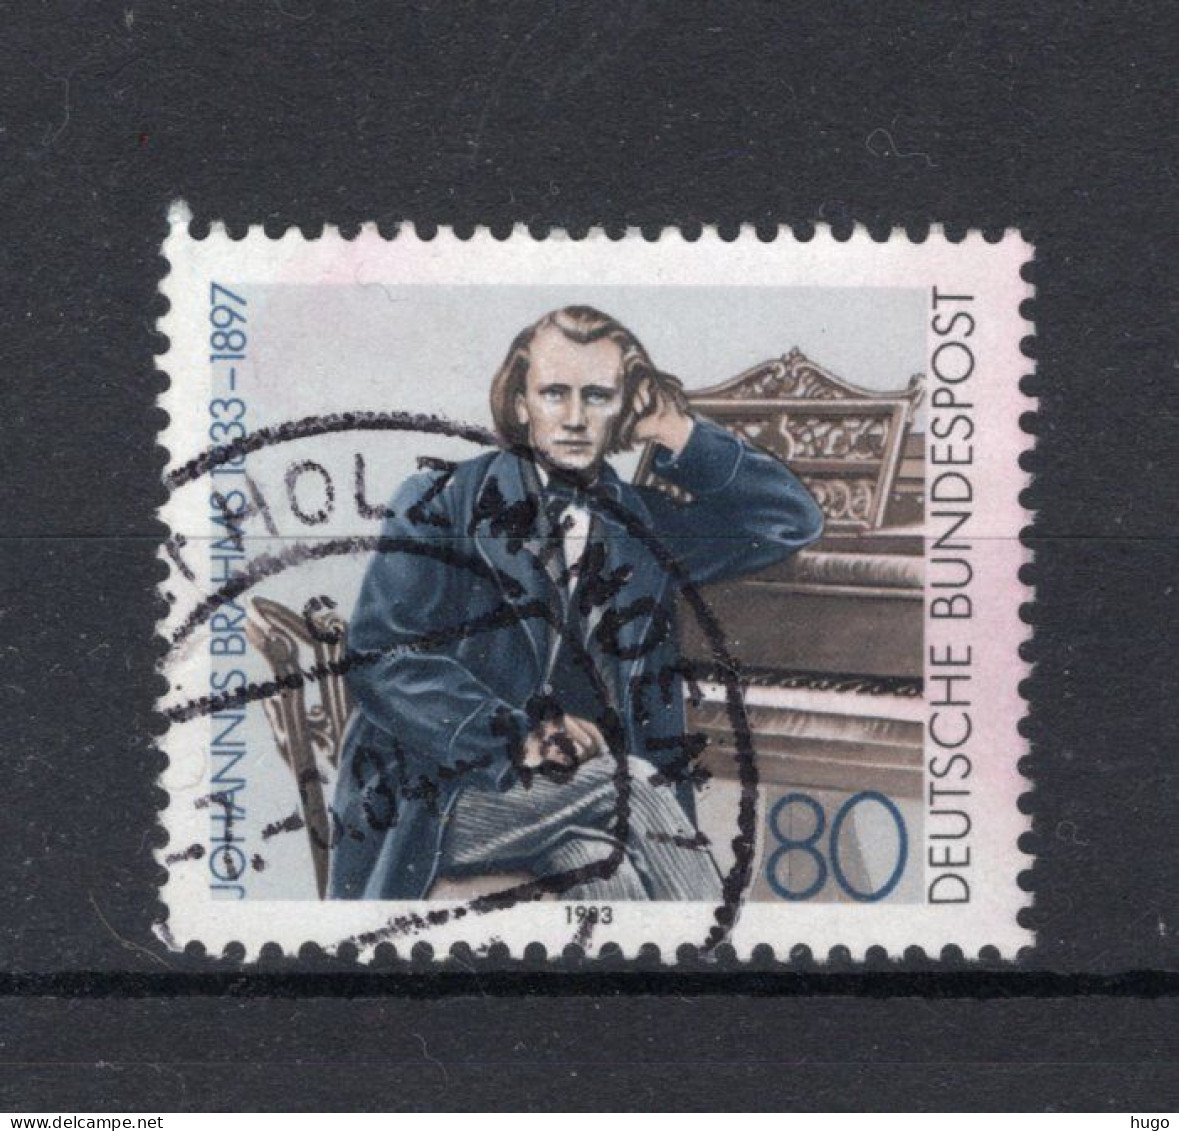 DUITSLAND Yt. 1009° Gestempeld 1983 - Used Stamps